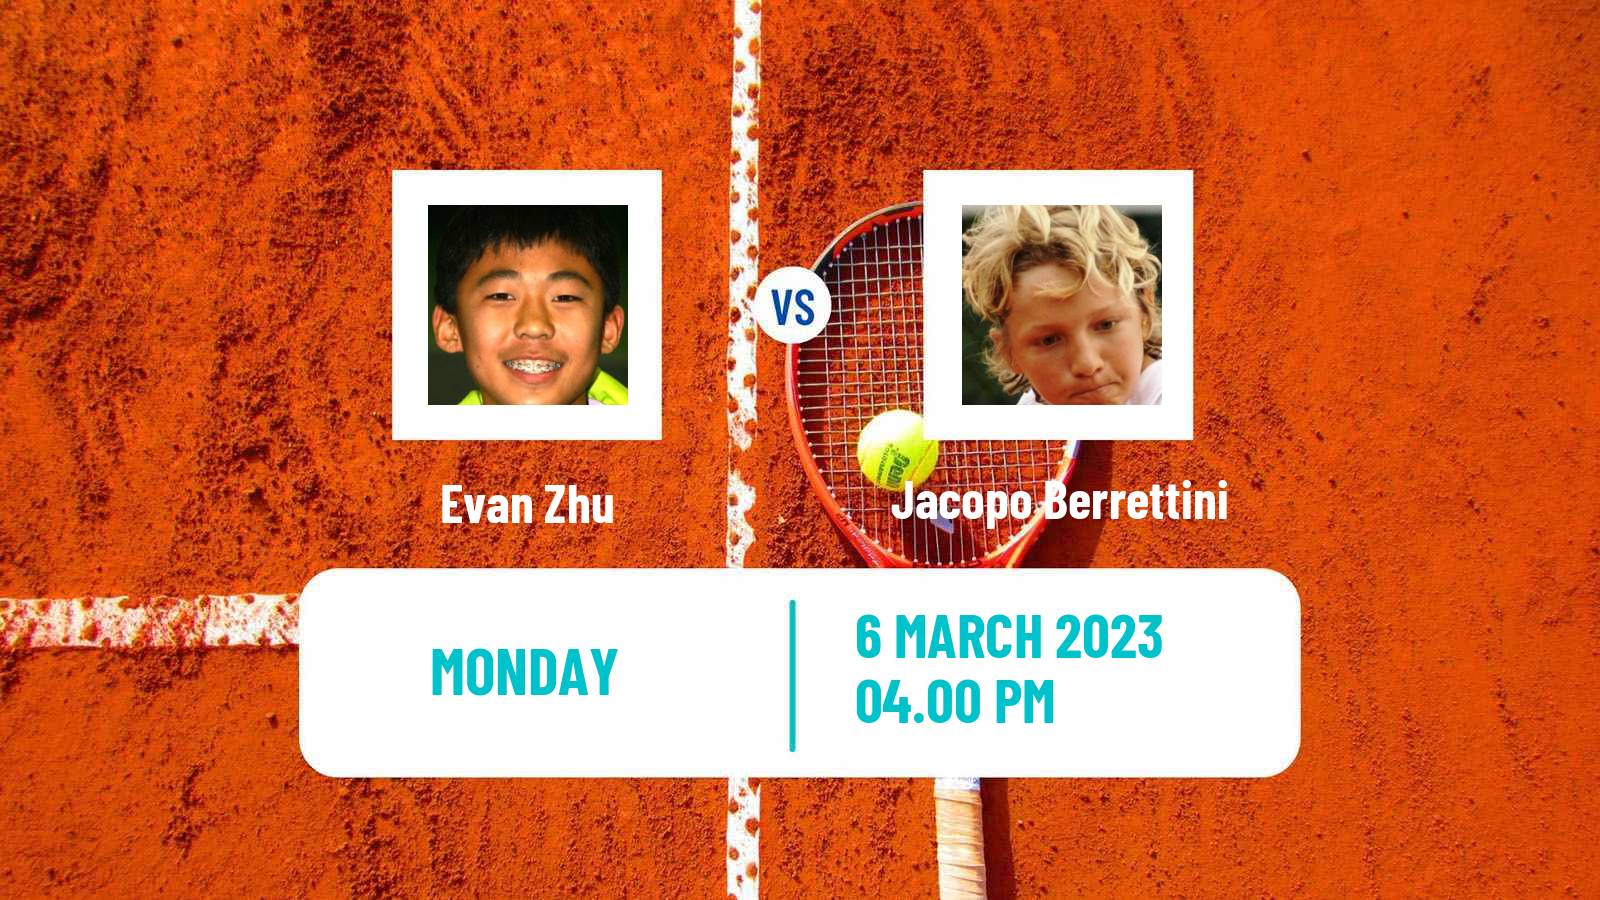 Tennis ATP Challenger Evan Zhu - Jacopo Berrettini